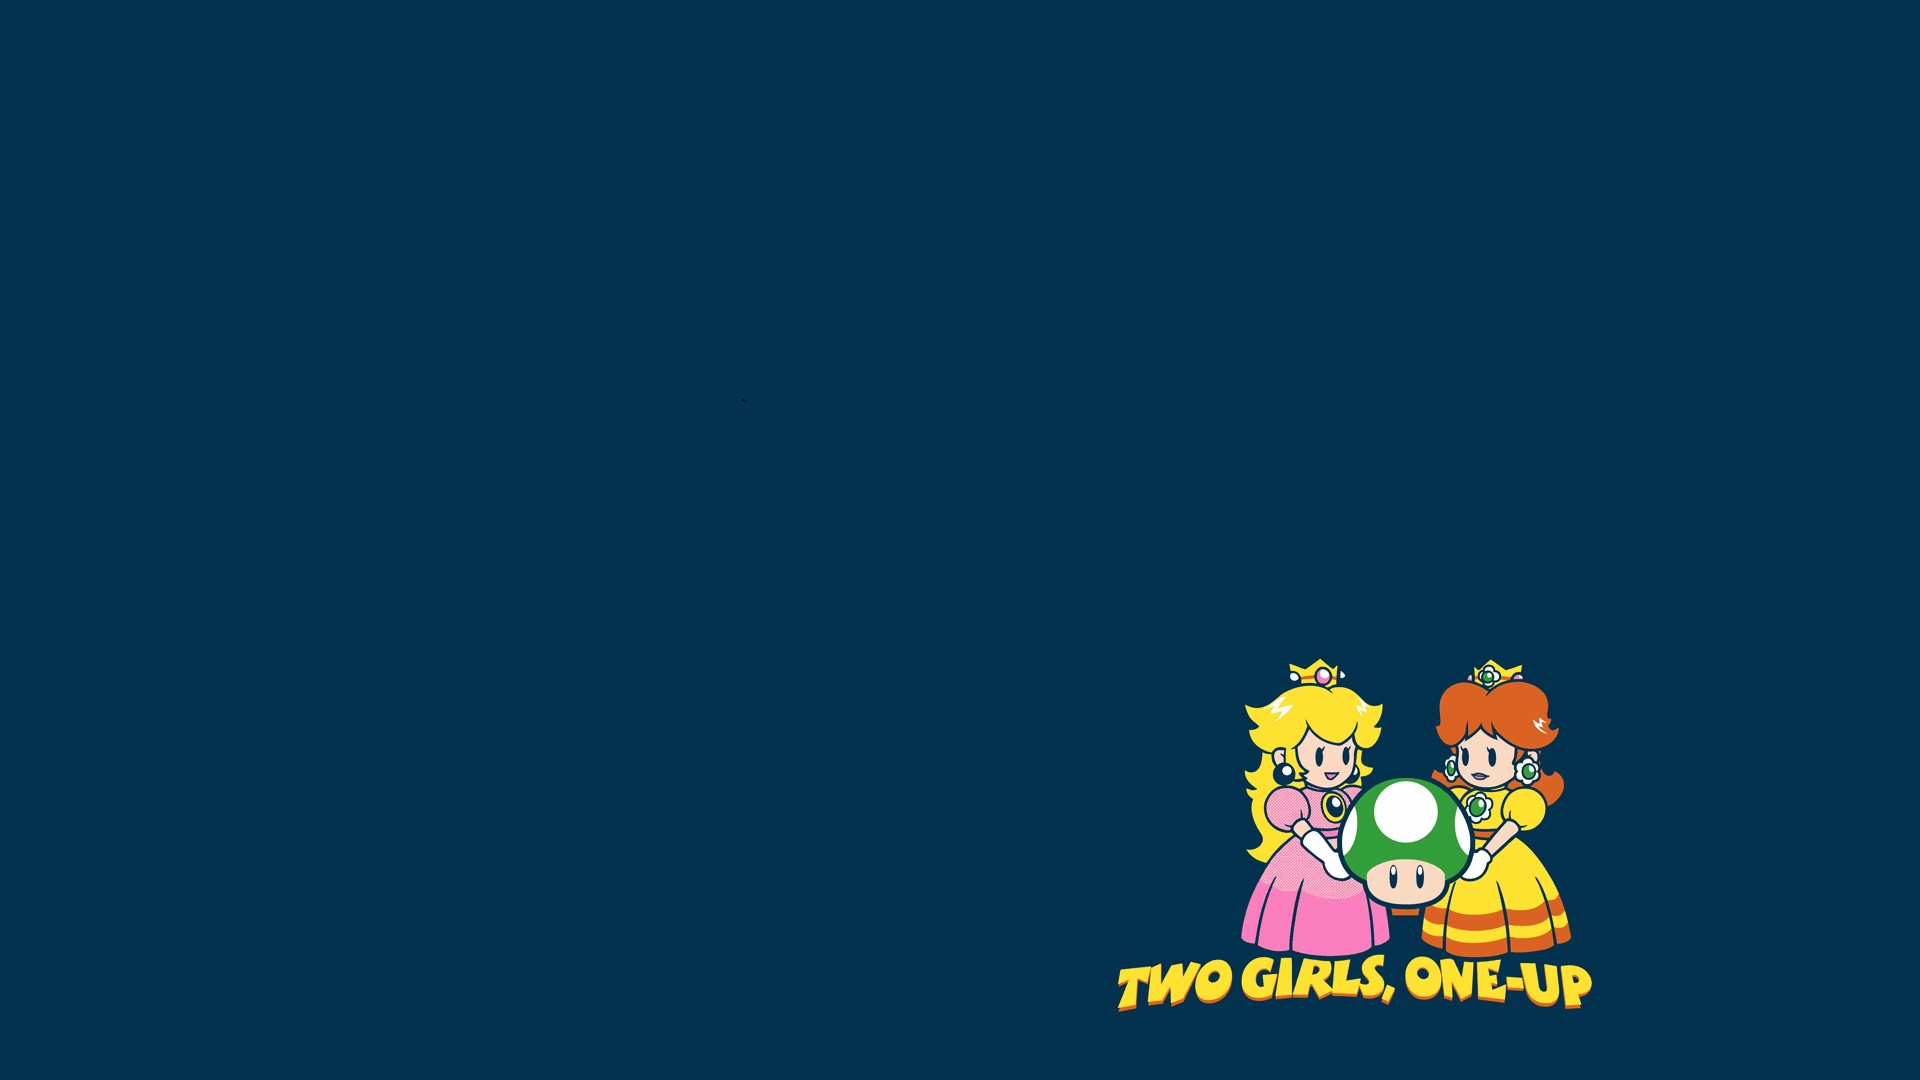 Video Games Women 1 Up Simple Humor Minimalism Super Mario Nintendo 1920x1080